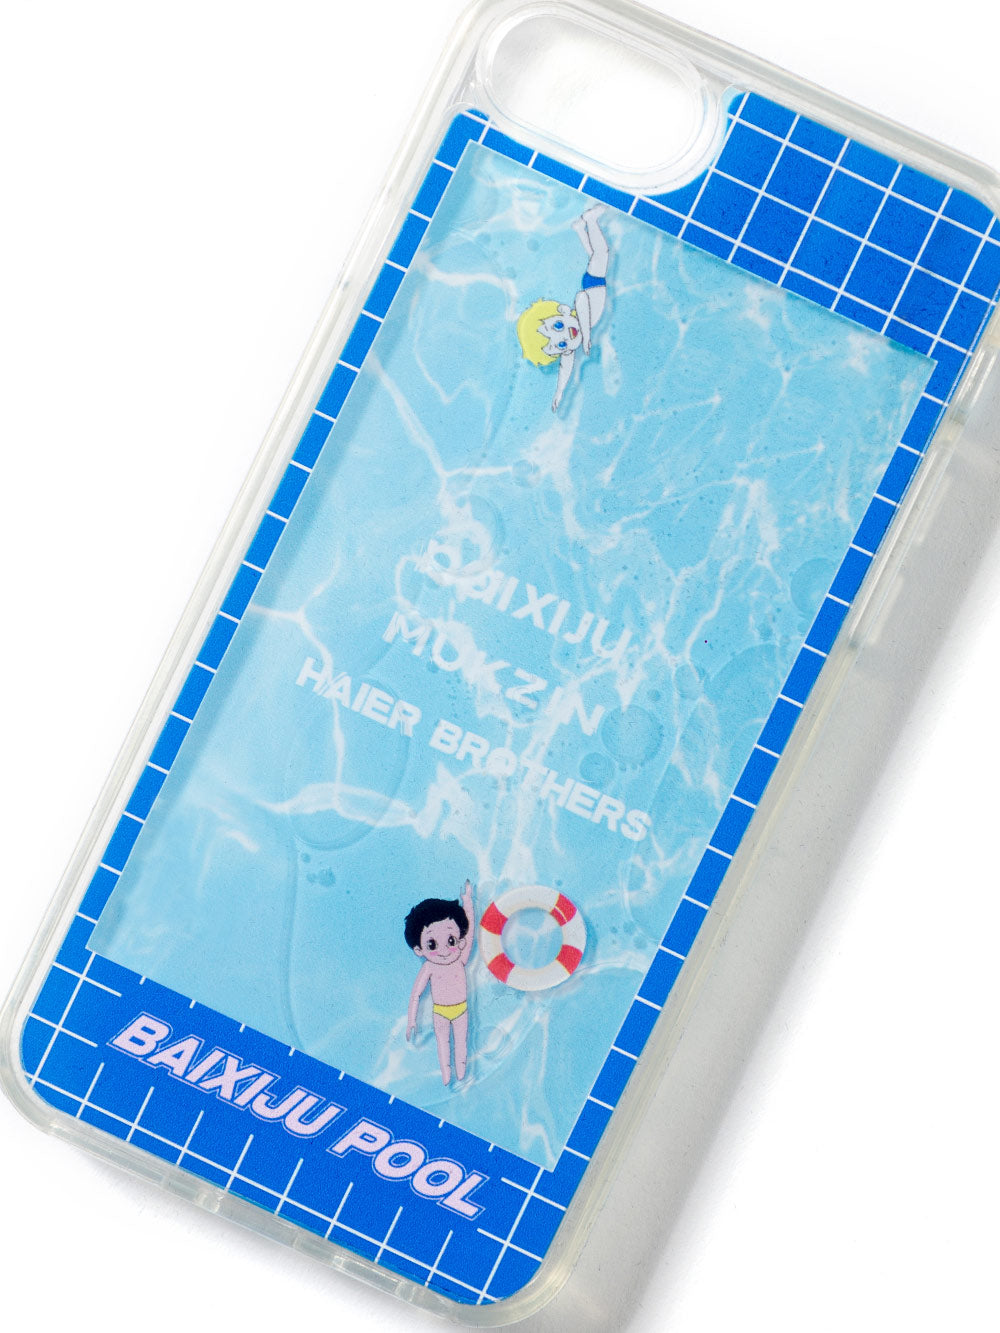 Mukzin Designer Brand X Haier Brothers Swimming Pool iPhone Case